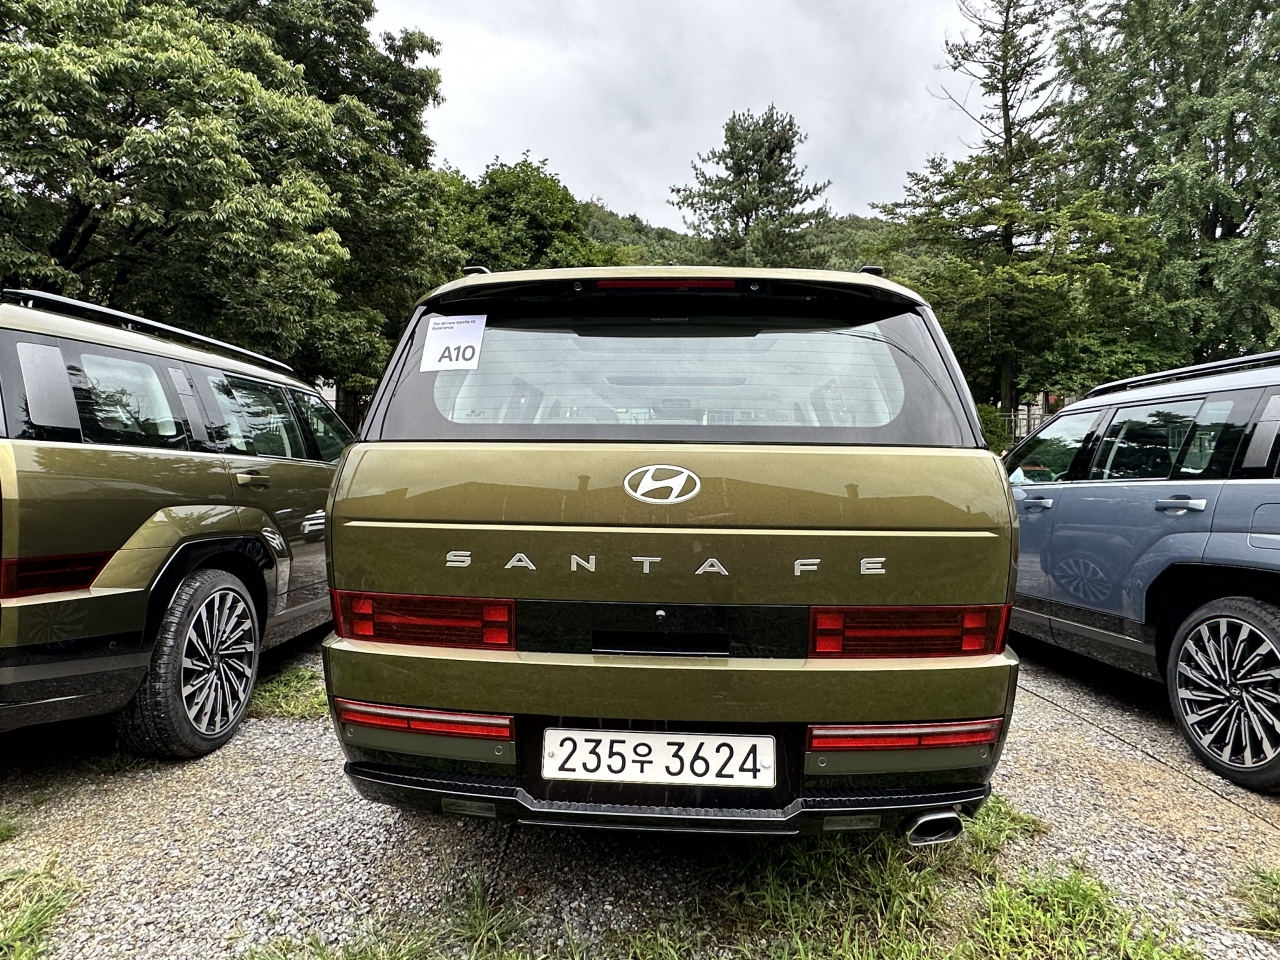 A rear view of Hyundai’s new Santa Fe (Byun Hye-jin/The Korea Herald)